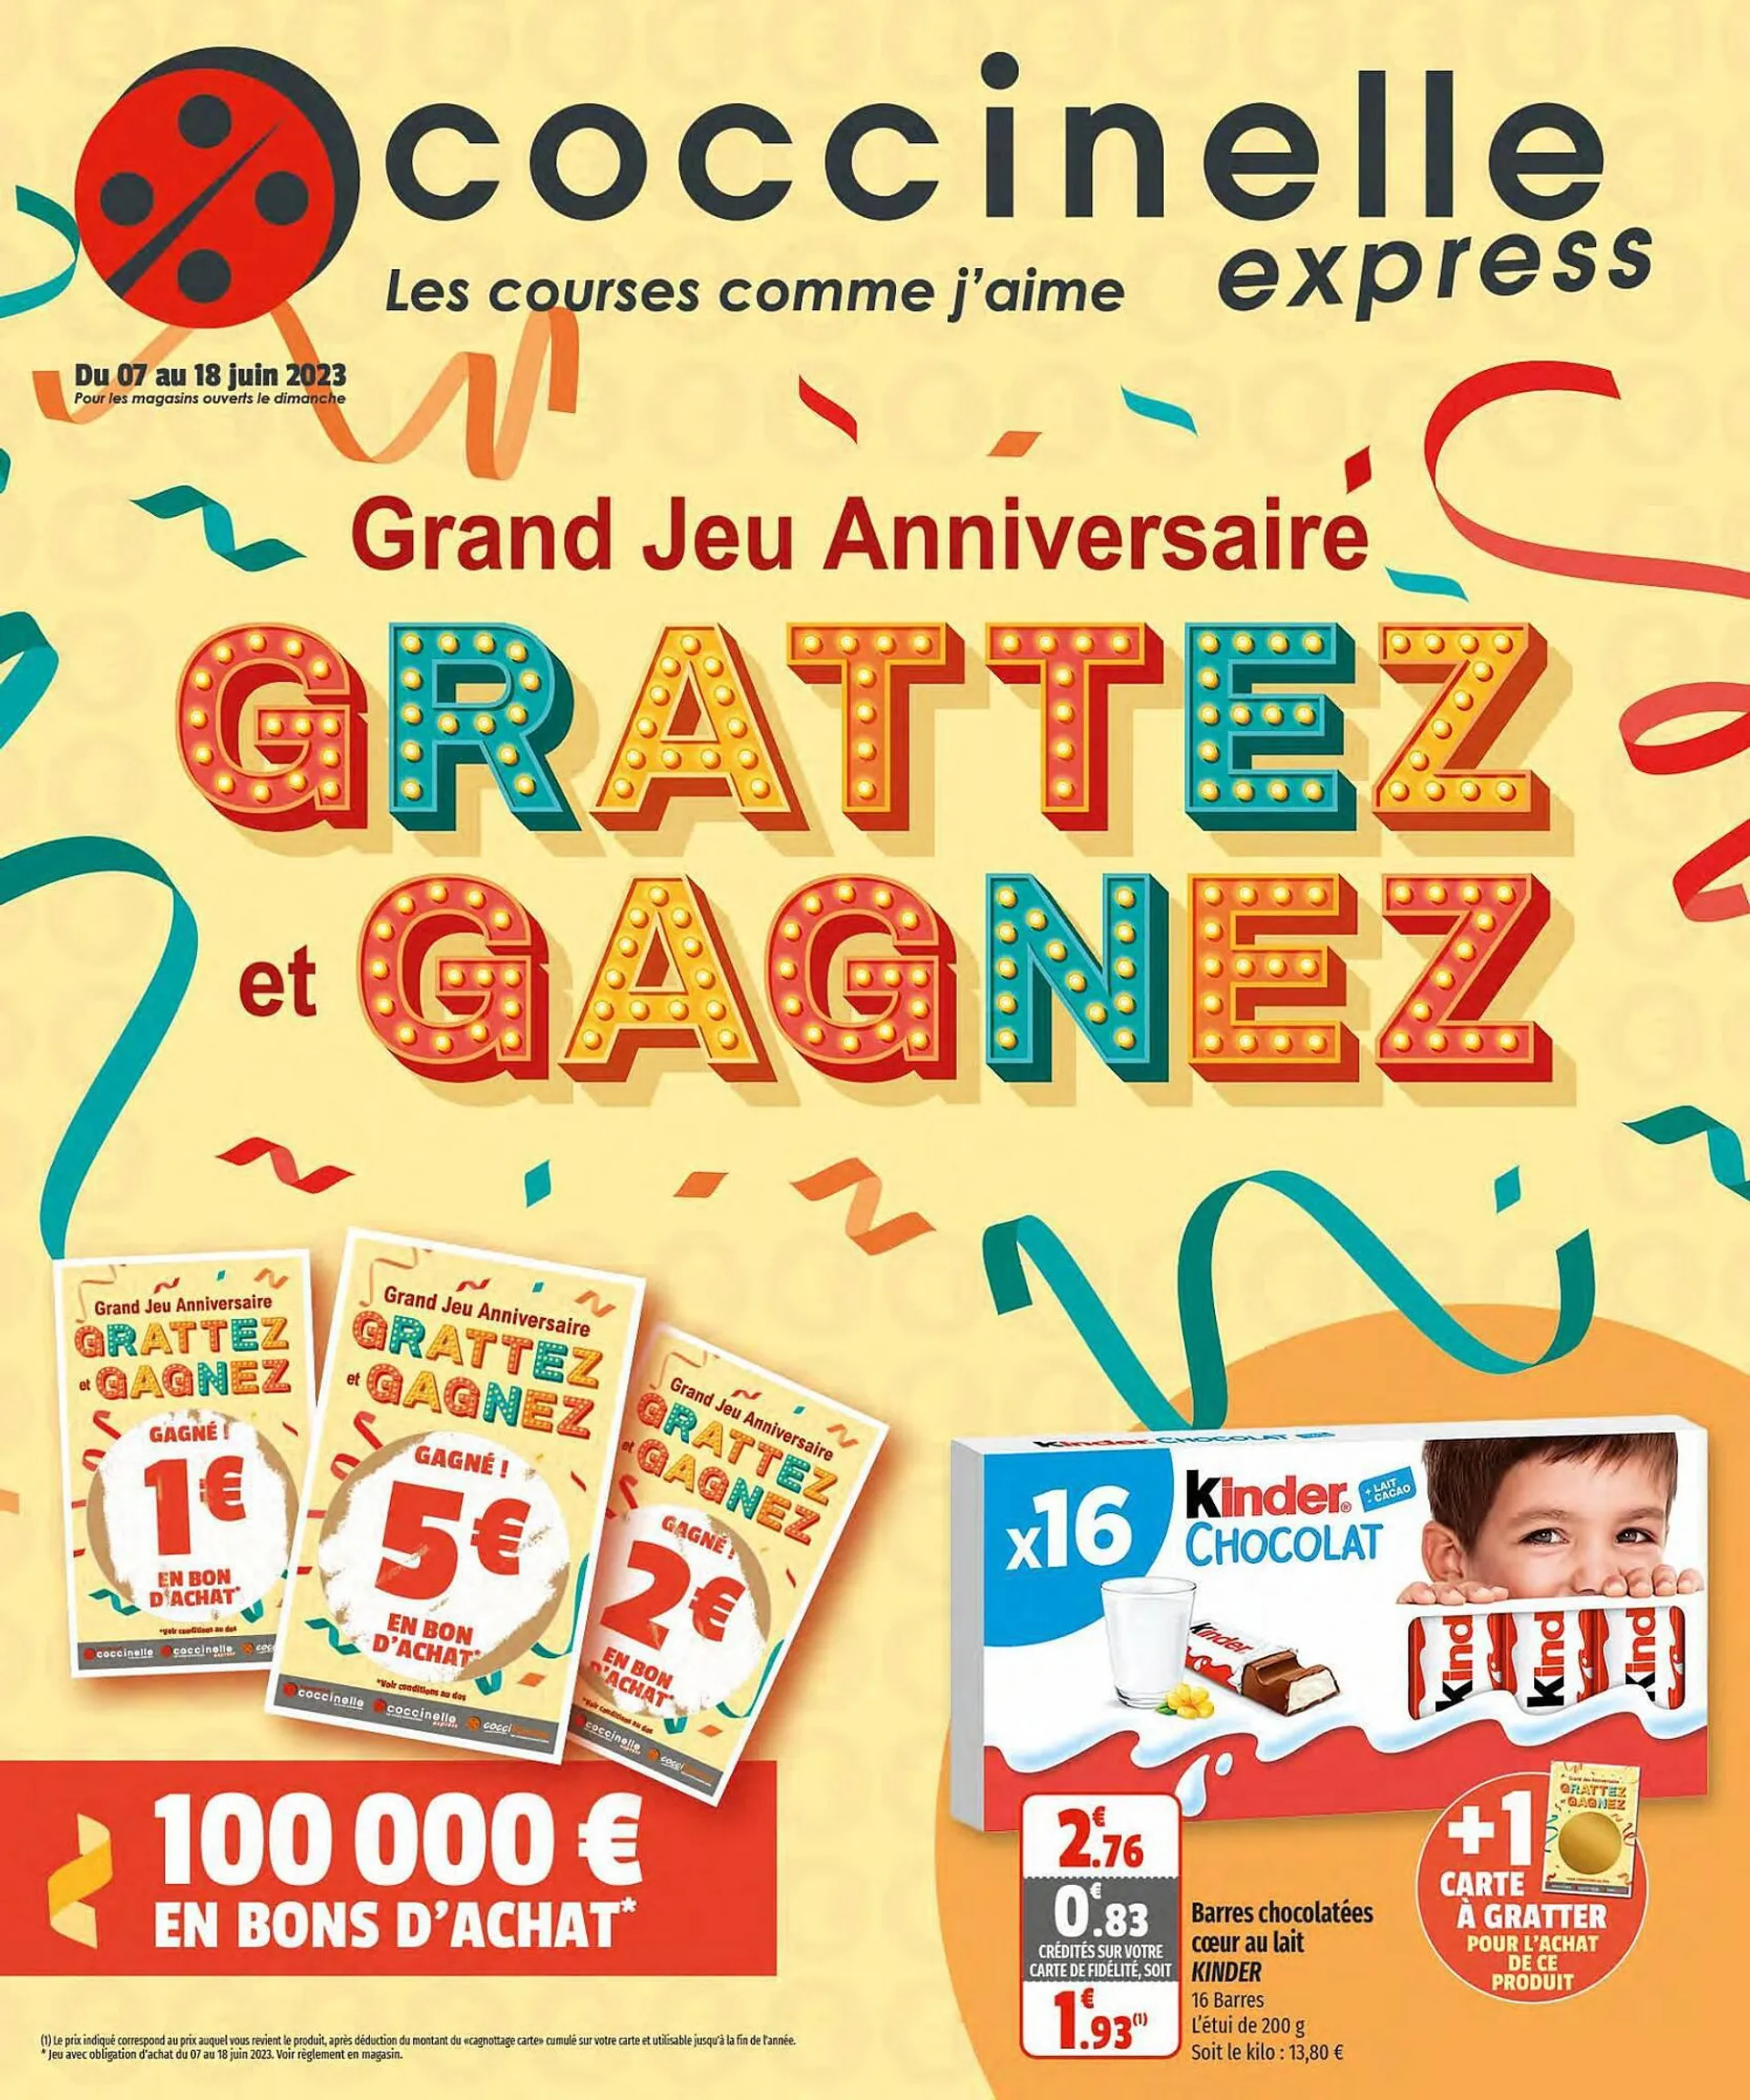 Catalogue Coccinelle Express - 1